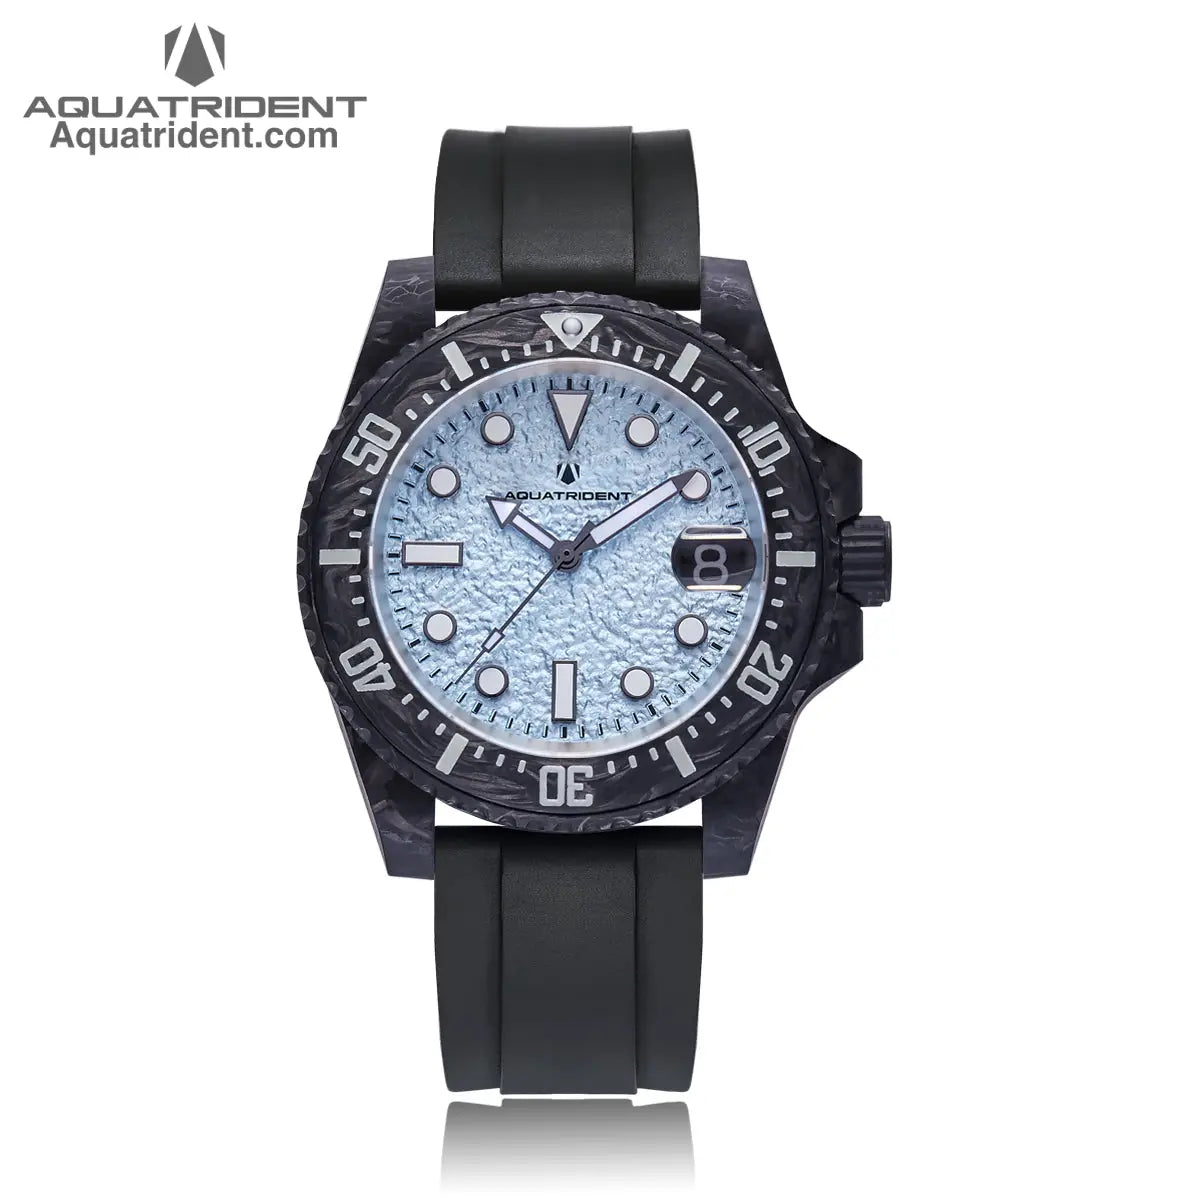 black carbon fiber case and bezel-light blue rough textured dial with dates-black fluororubber strap-watch